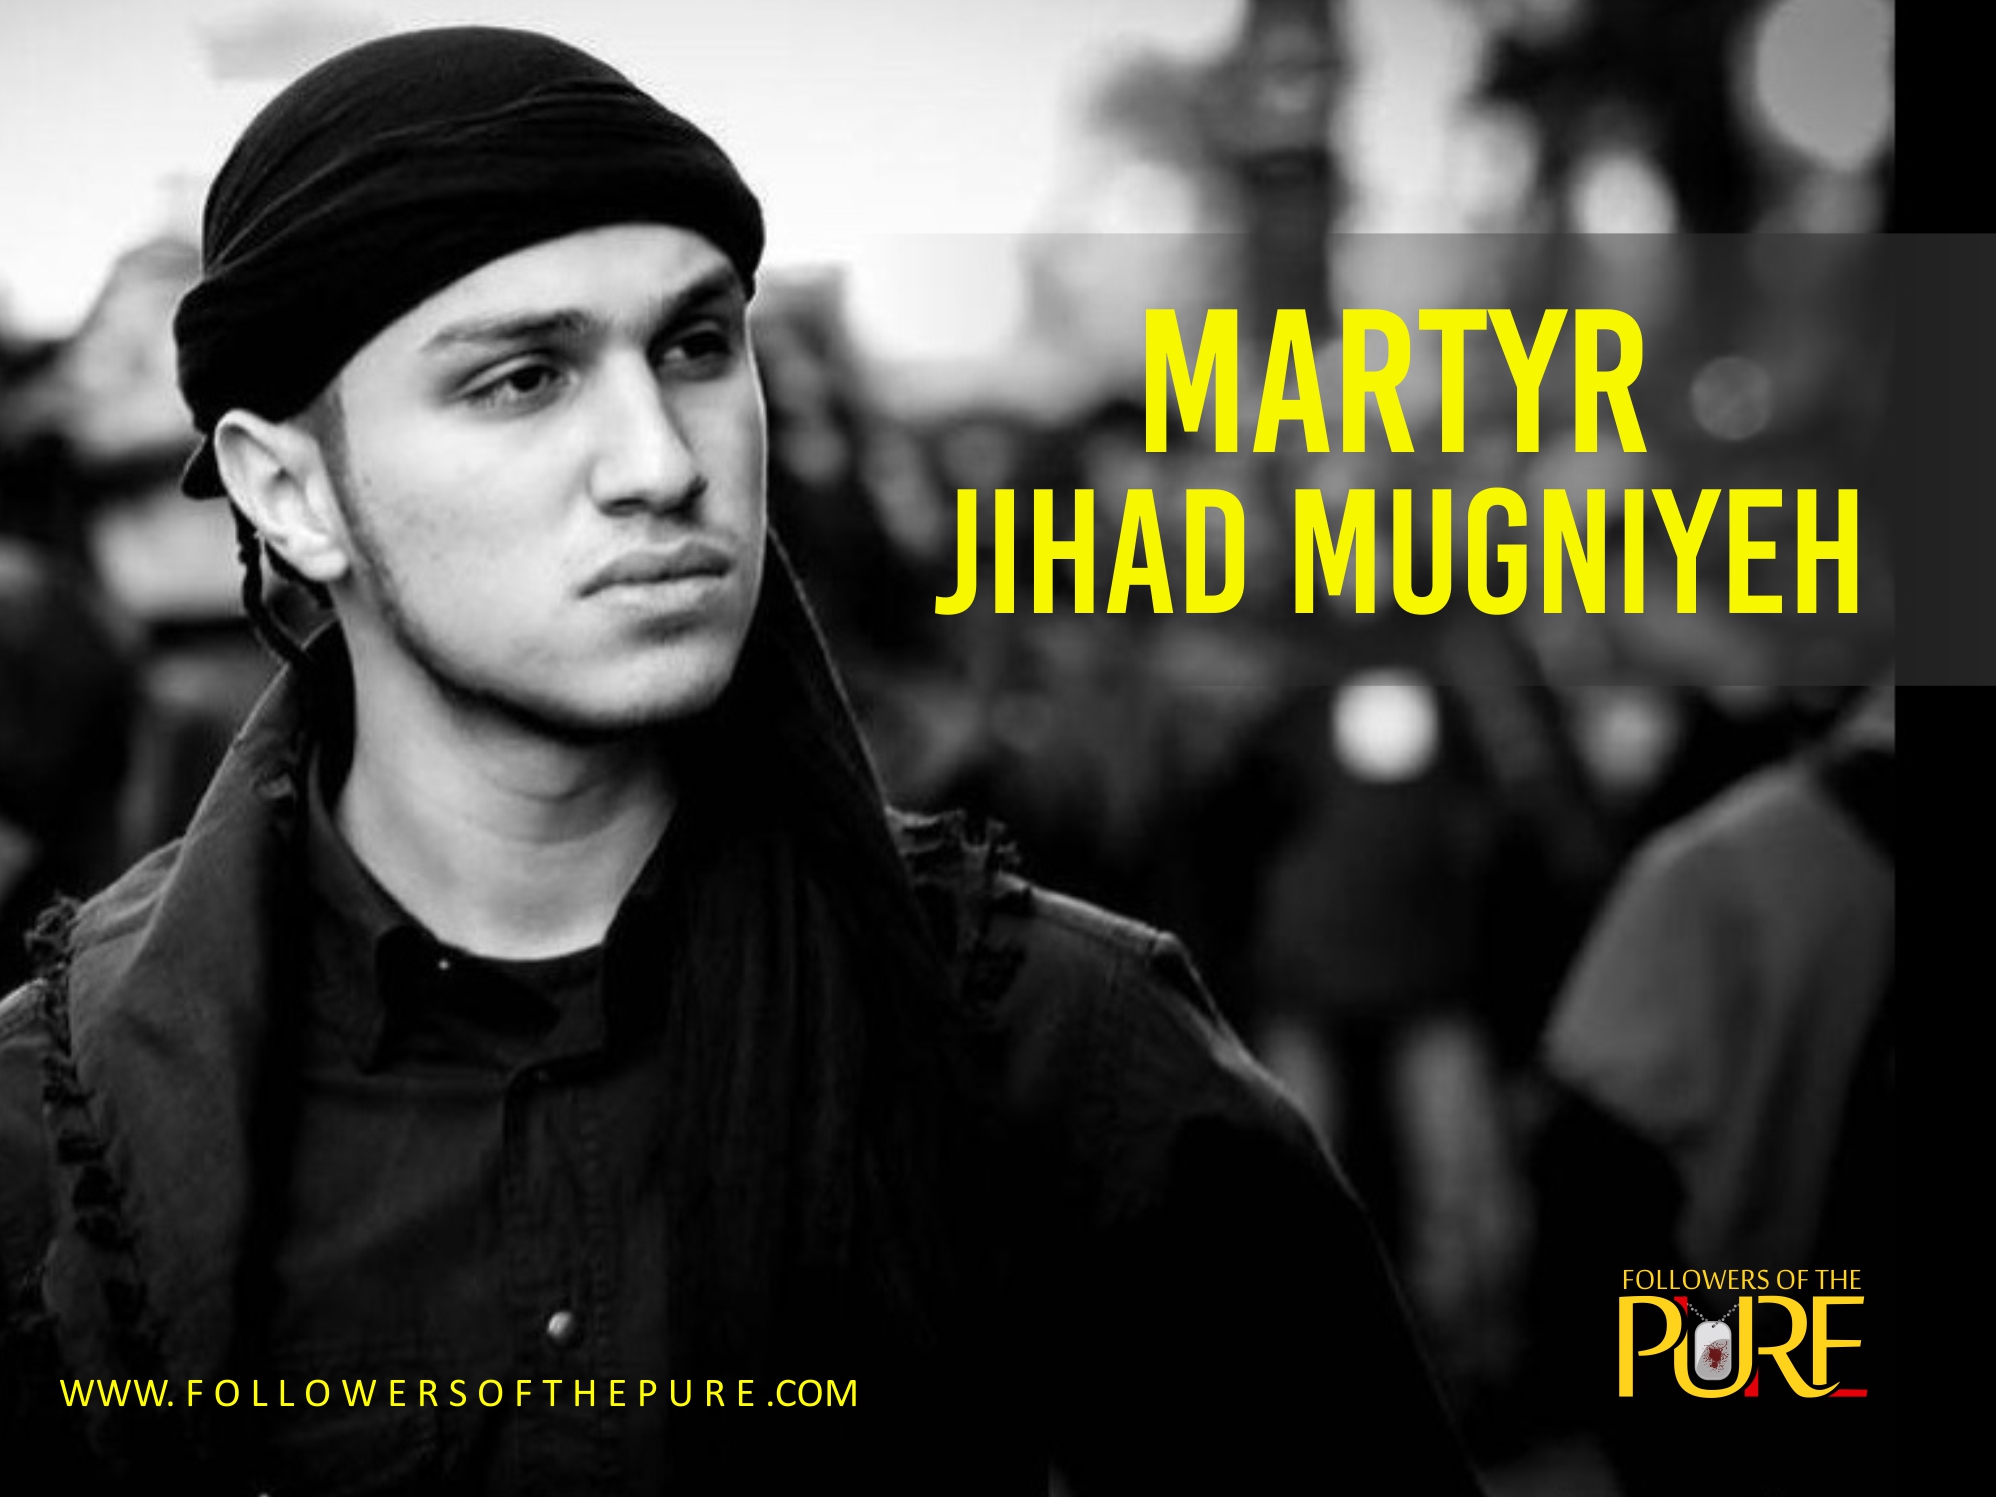 Biography of Martyr Jihad Mugniyeh